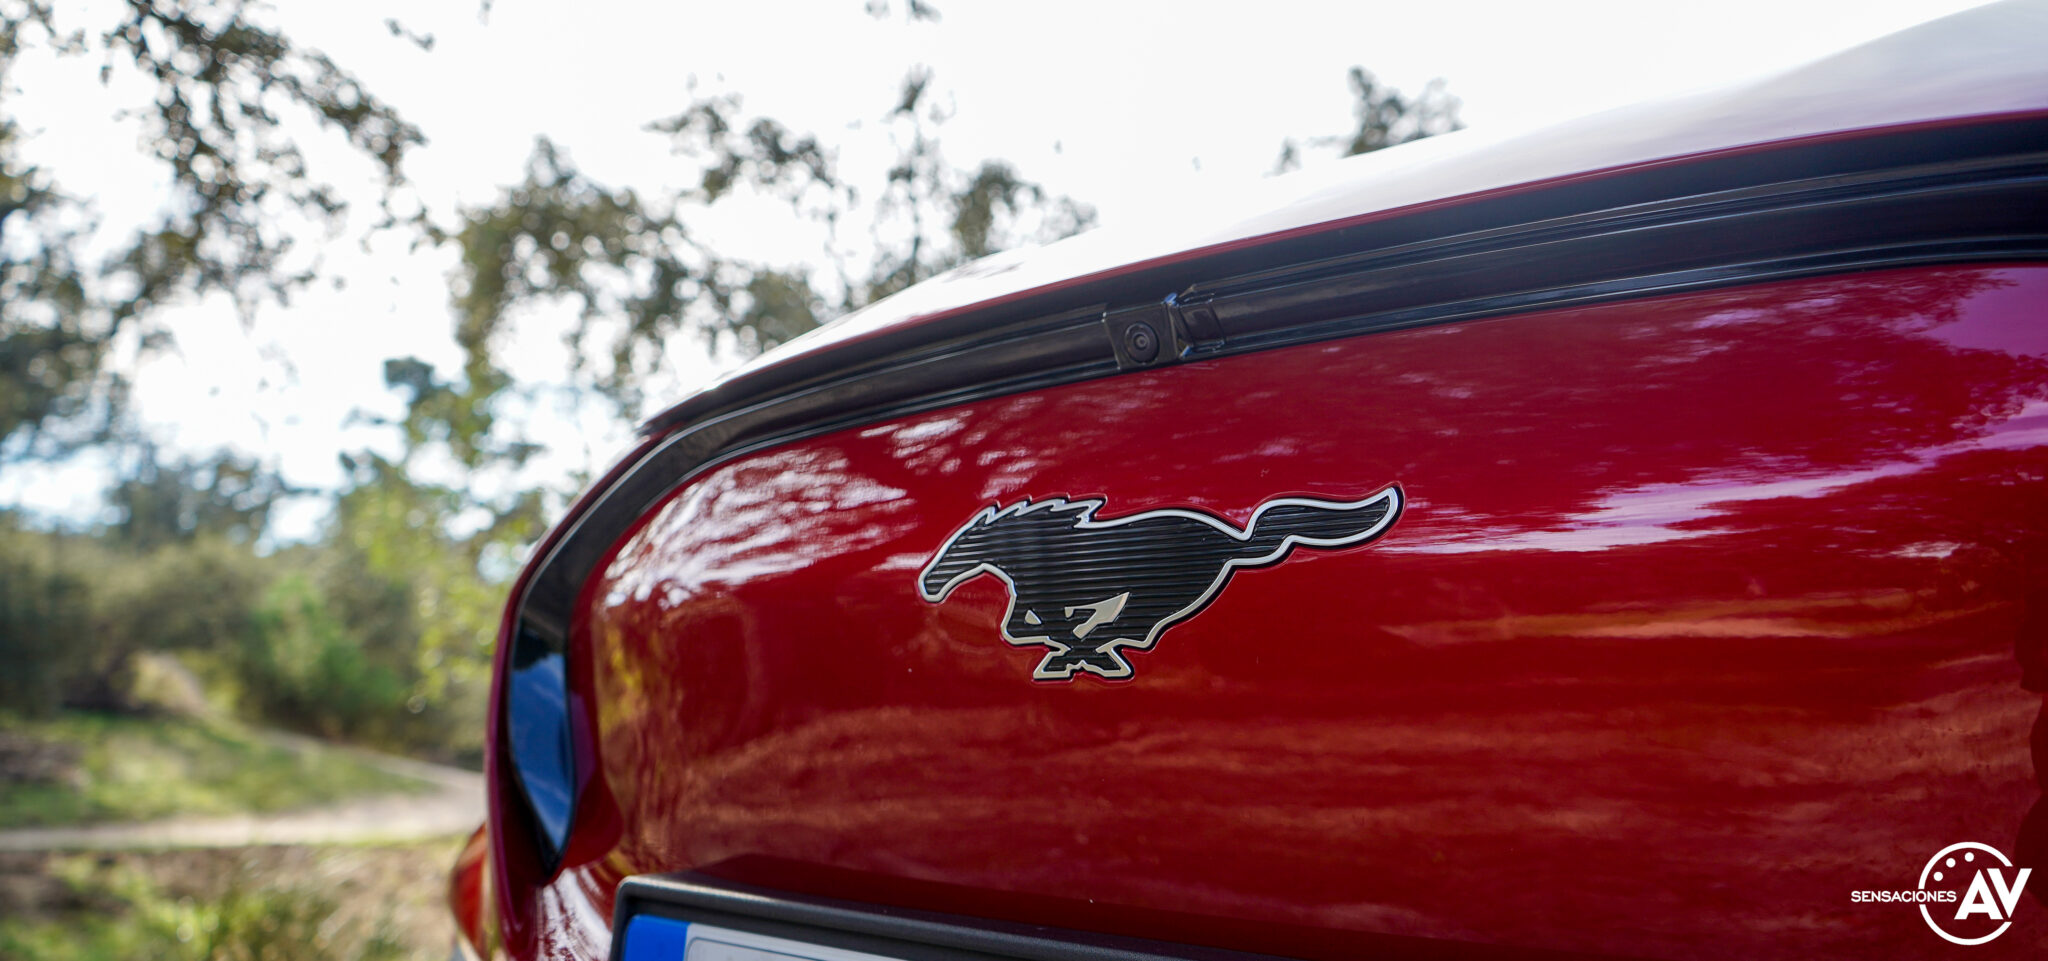 Logo del morro Ford Mustang Match e scaled - Prueba Ford Mustang Mach-E Rango Extendido 99 kWh: ¿Un SUV eléctrico merece  llamarse Mustang?